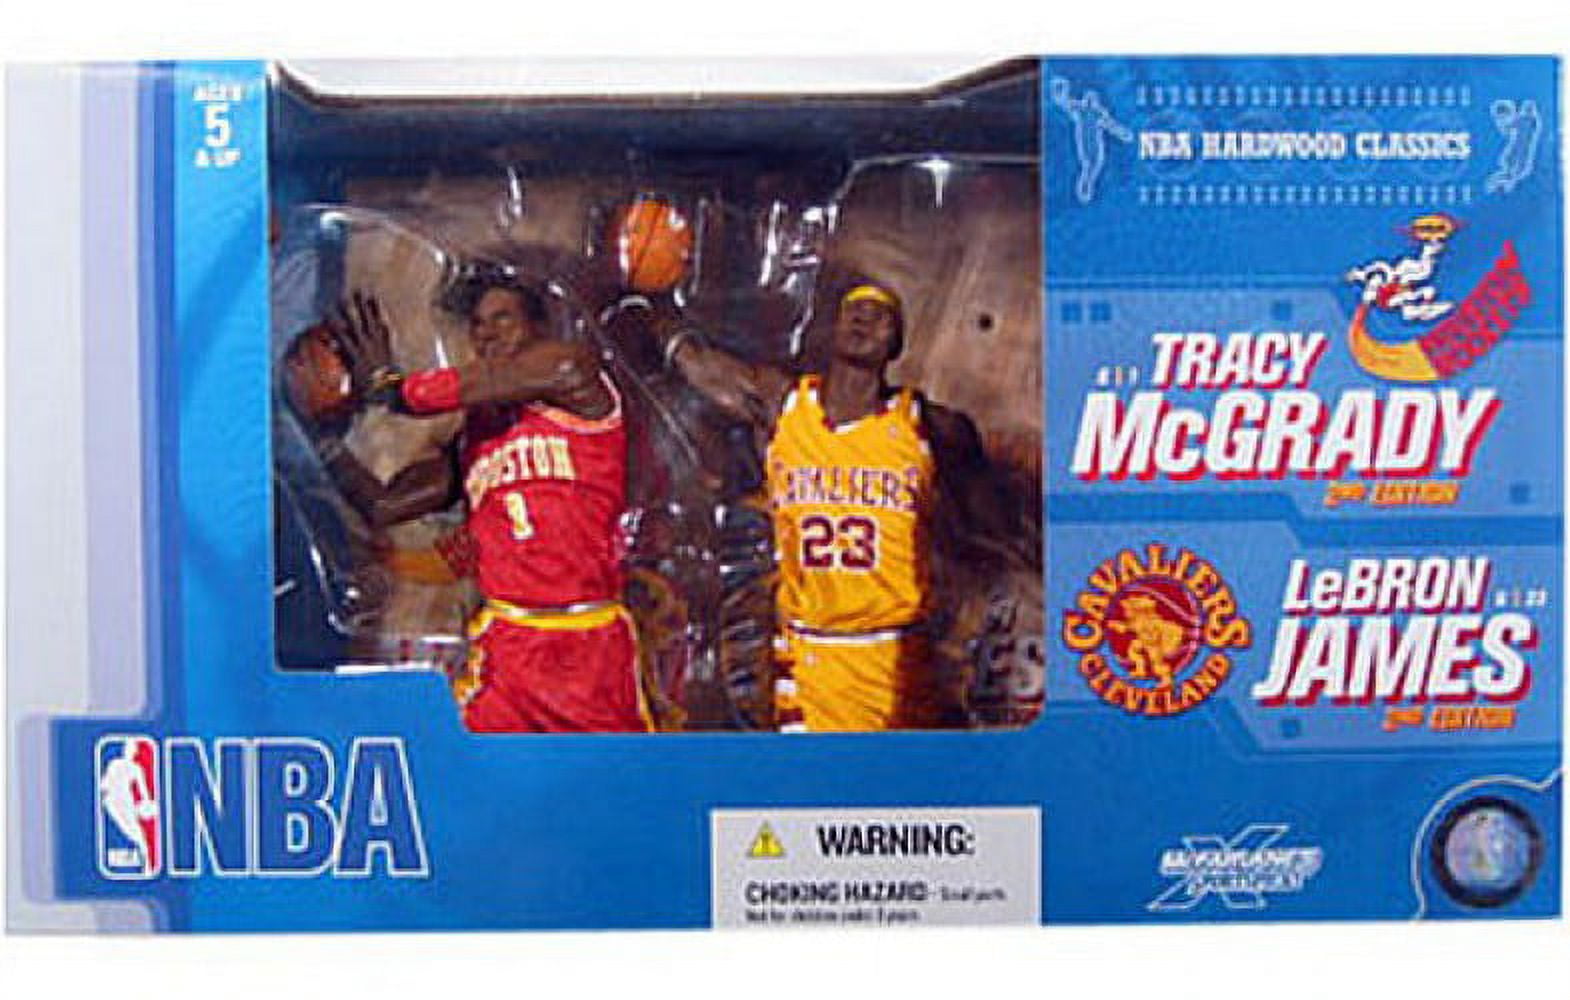 NBA Hardwood Classics Figures - Tracy McGrady/LeBron James